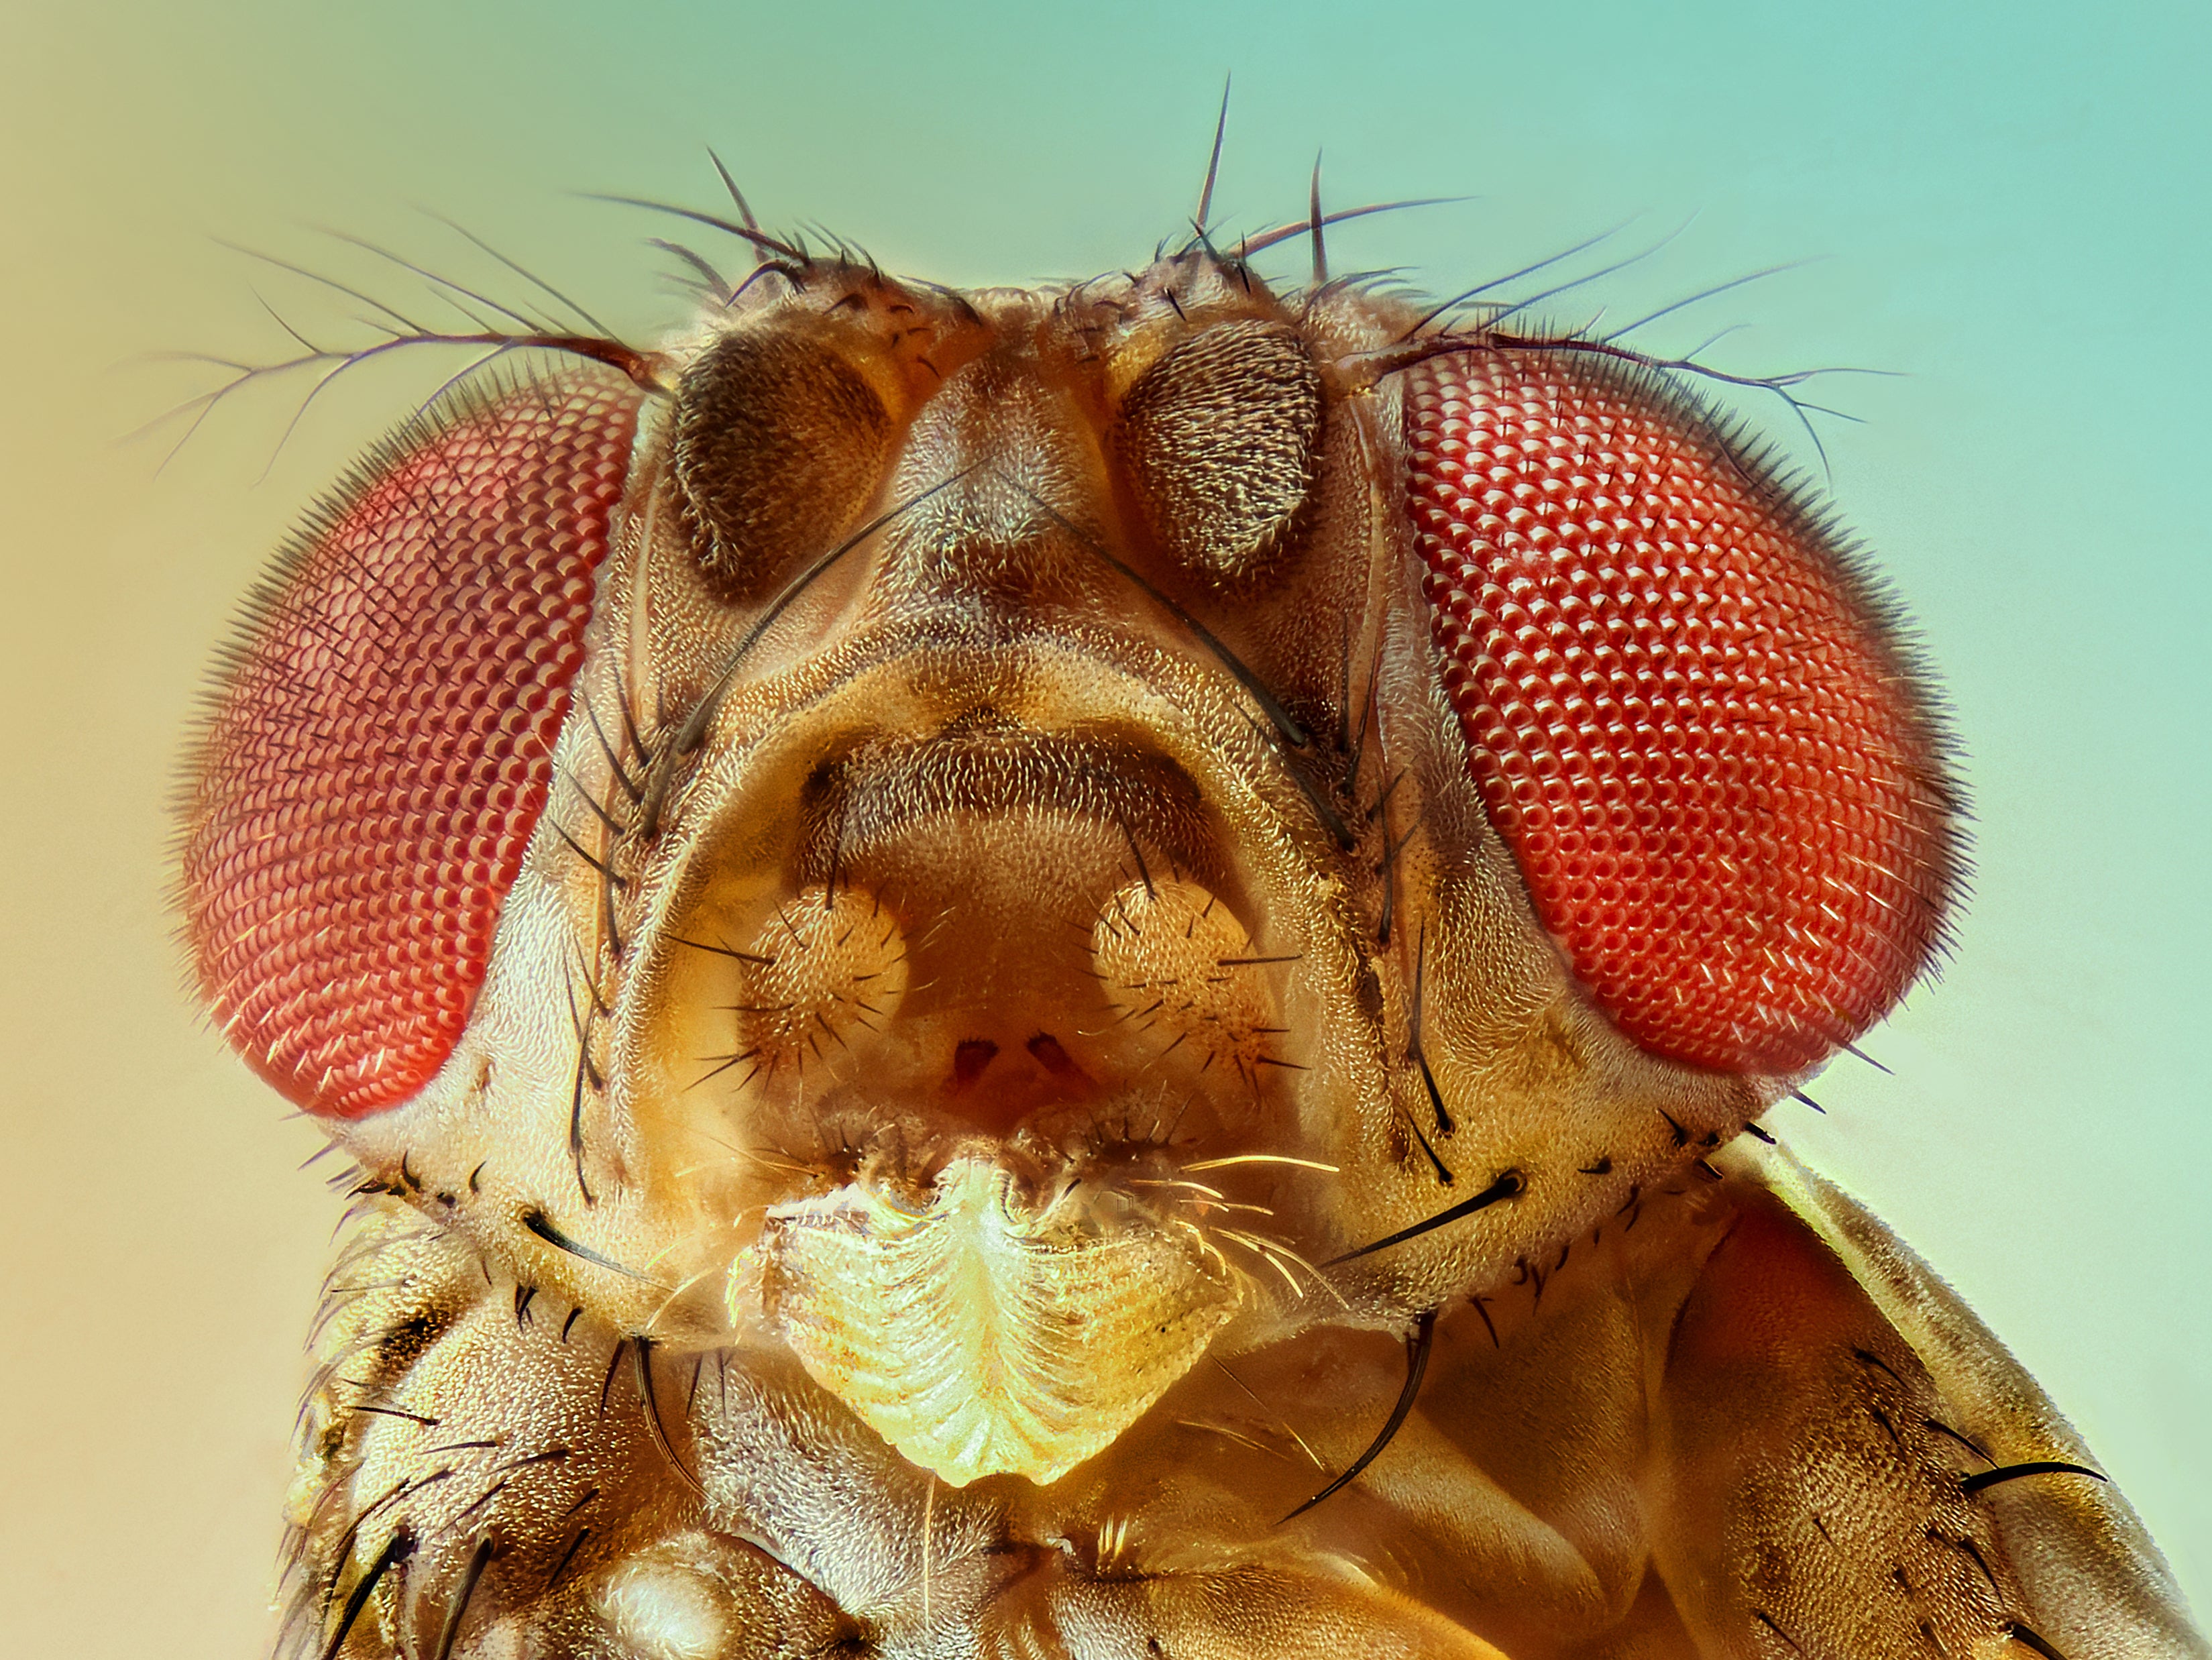 Fruit flies react like people to hunger